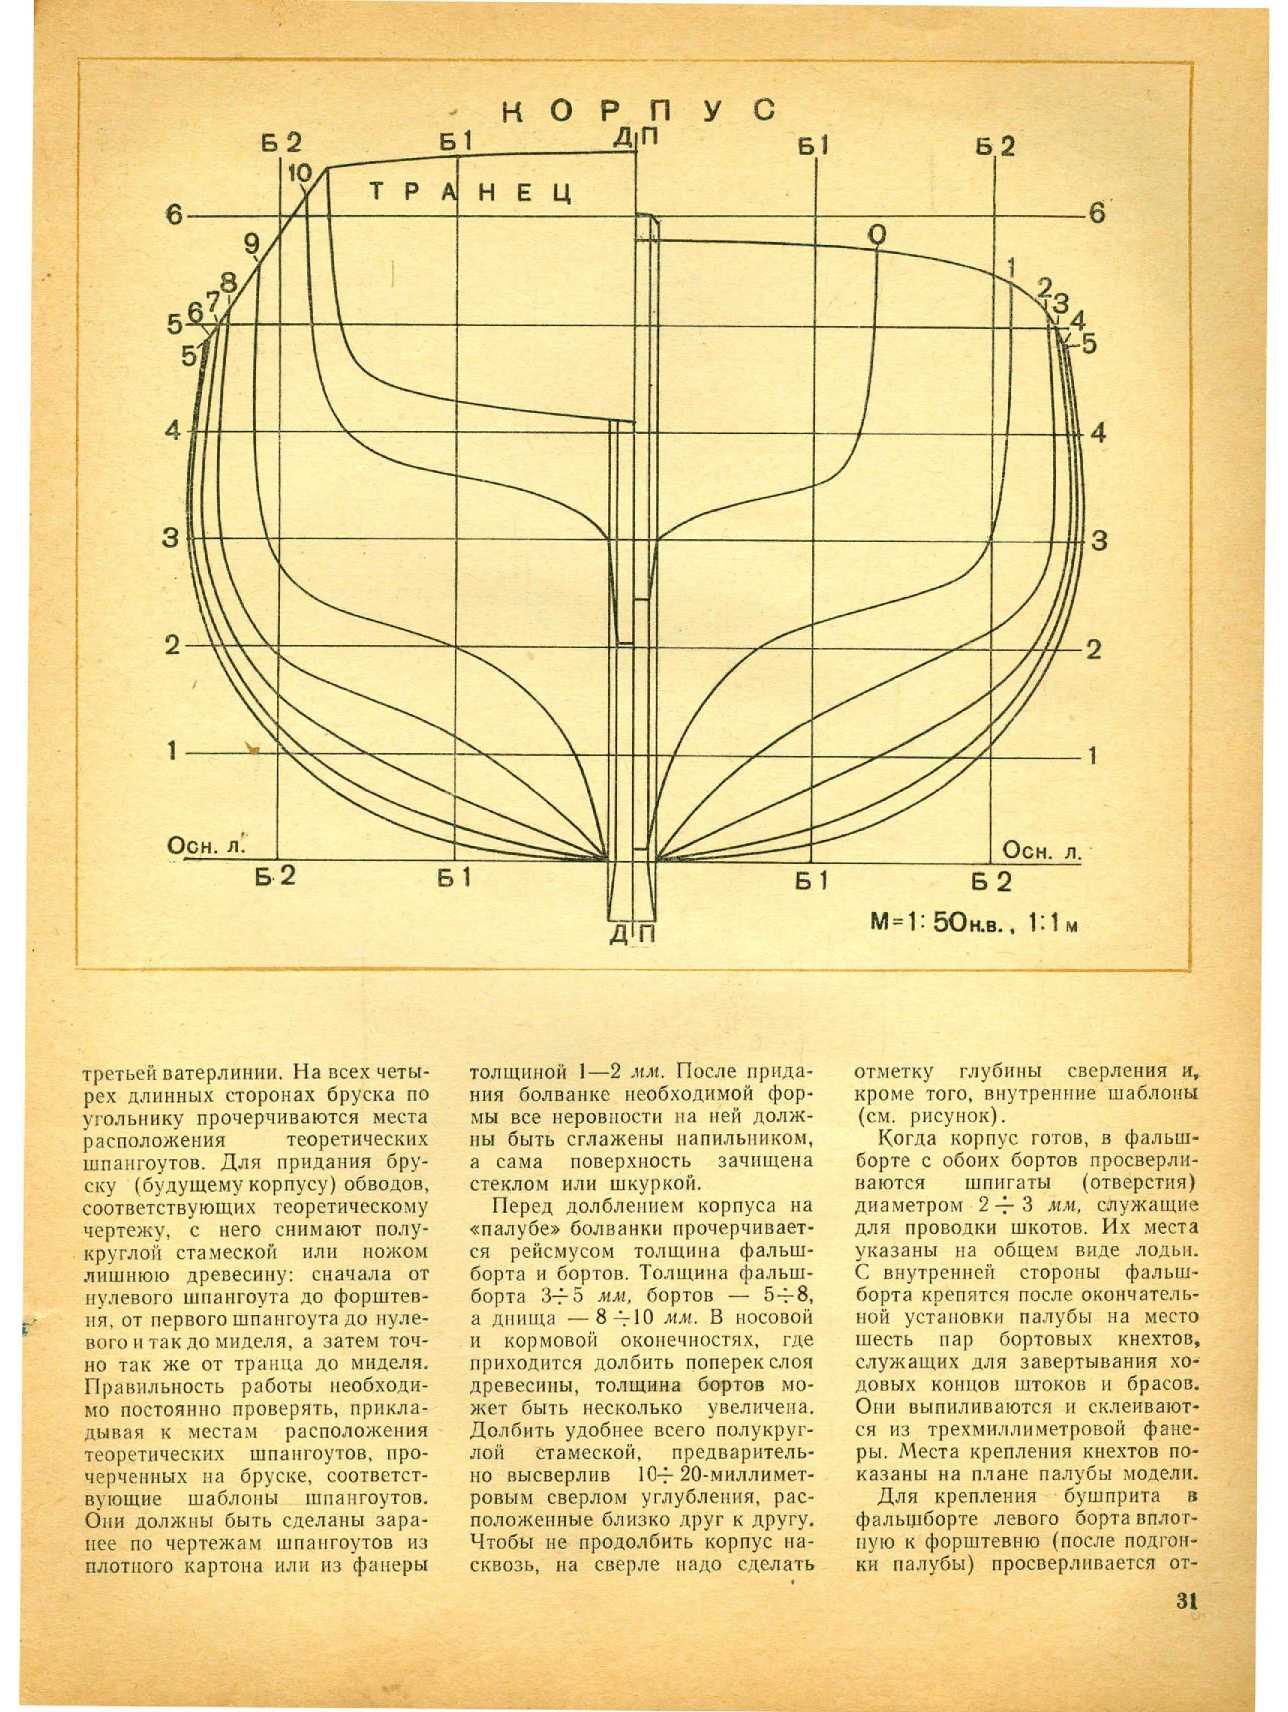 ЮМК 13, 1965, 31 c.